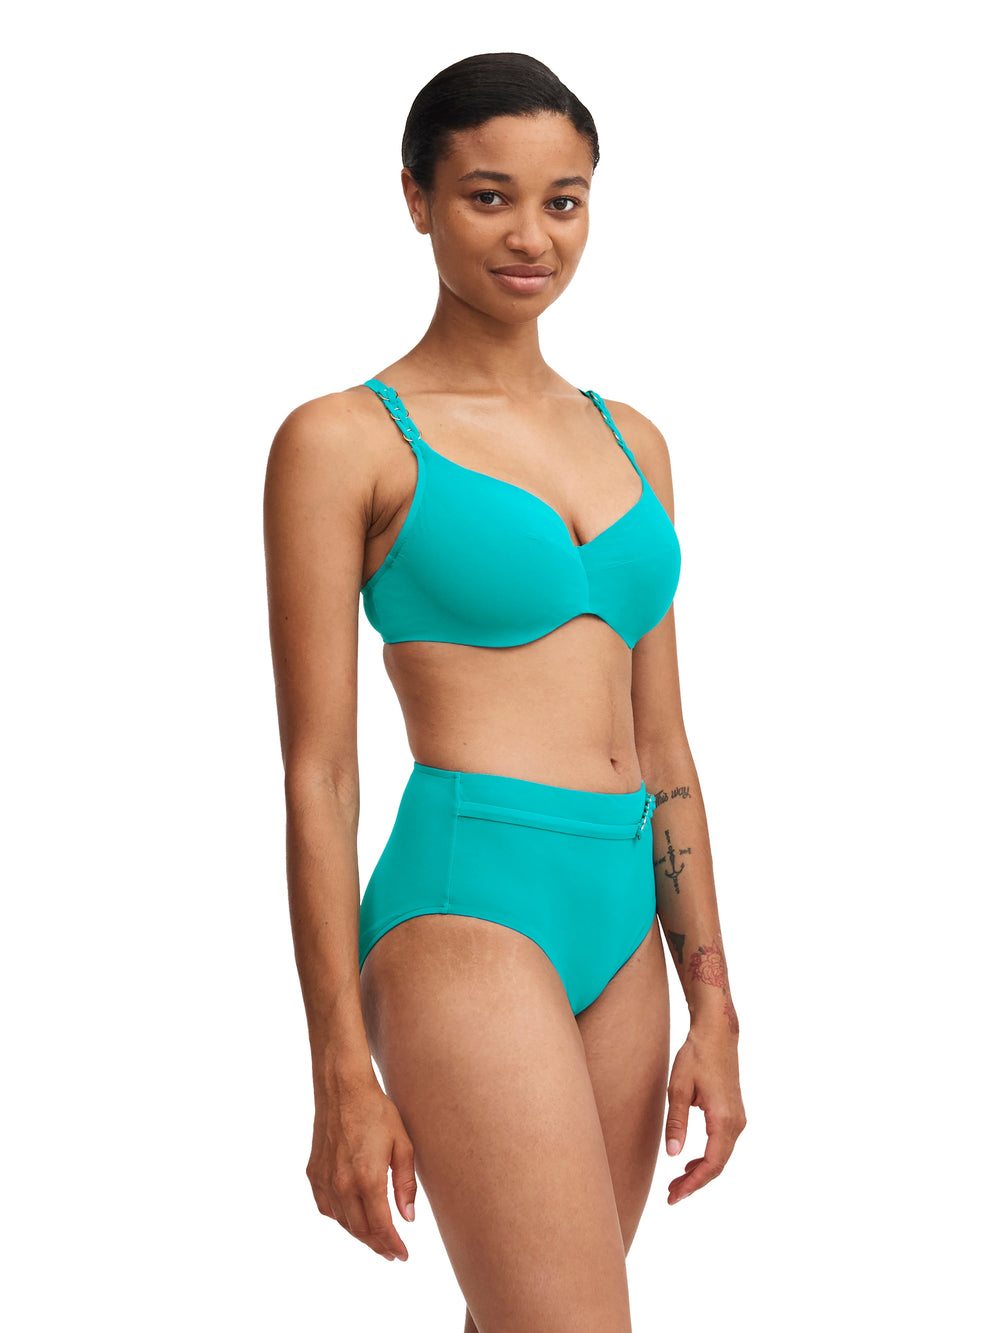 Chantelle Swimwear Emblem Covering Underwired Bikini - Lake Blue Full Cup Bikini Chantelle Swimwear 